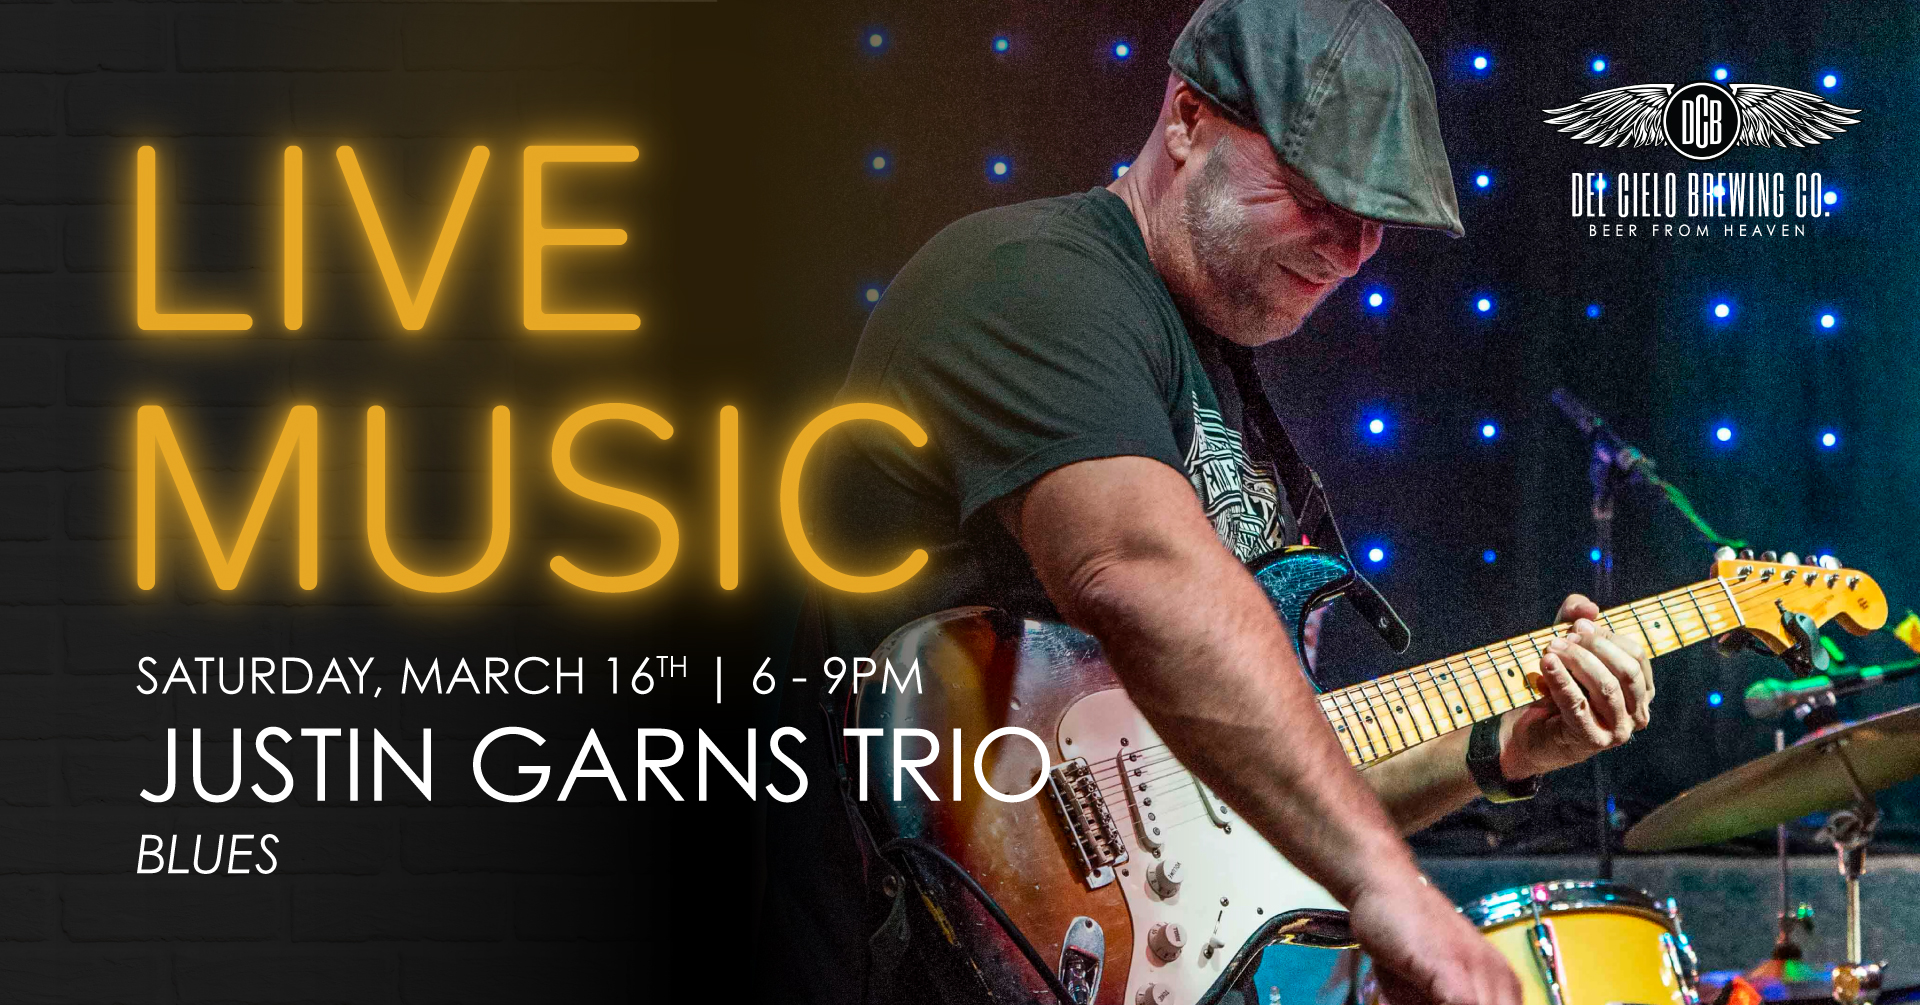 Justin Garns trio live music march 16th